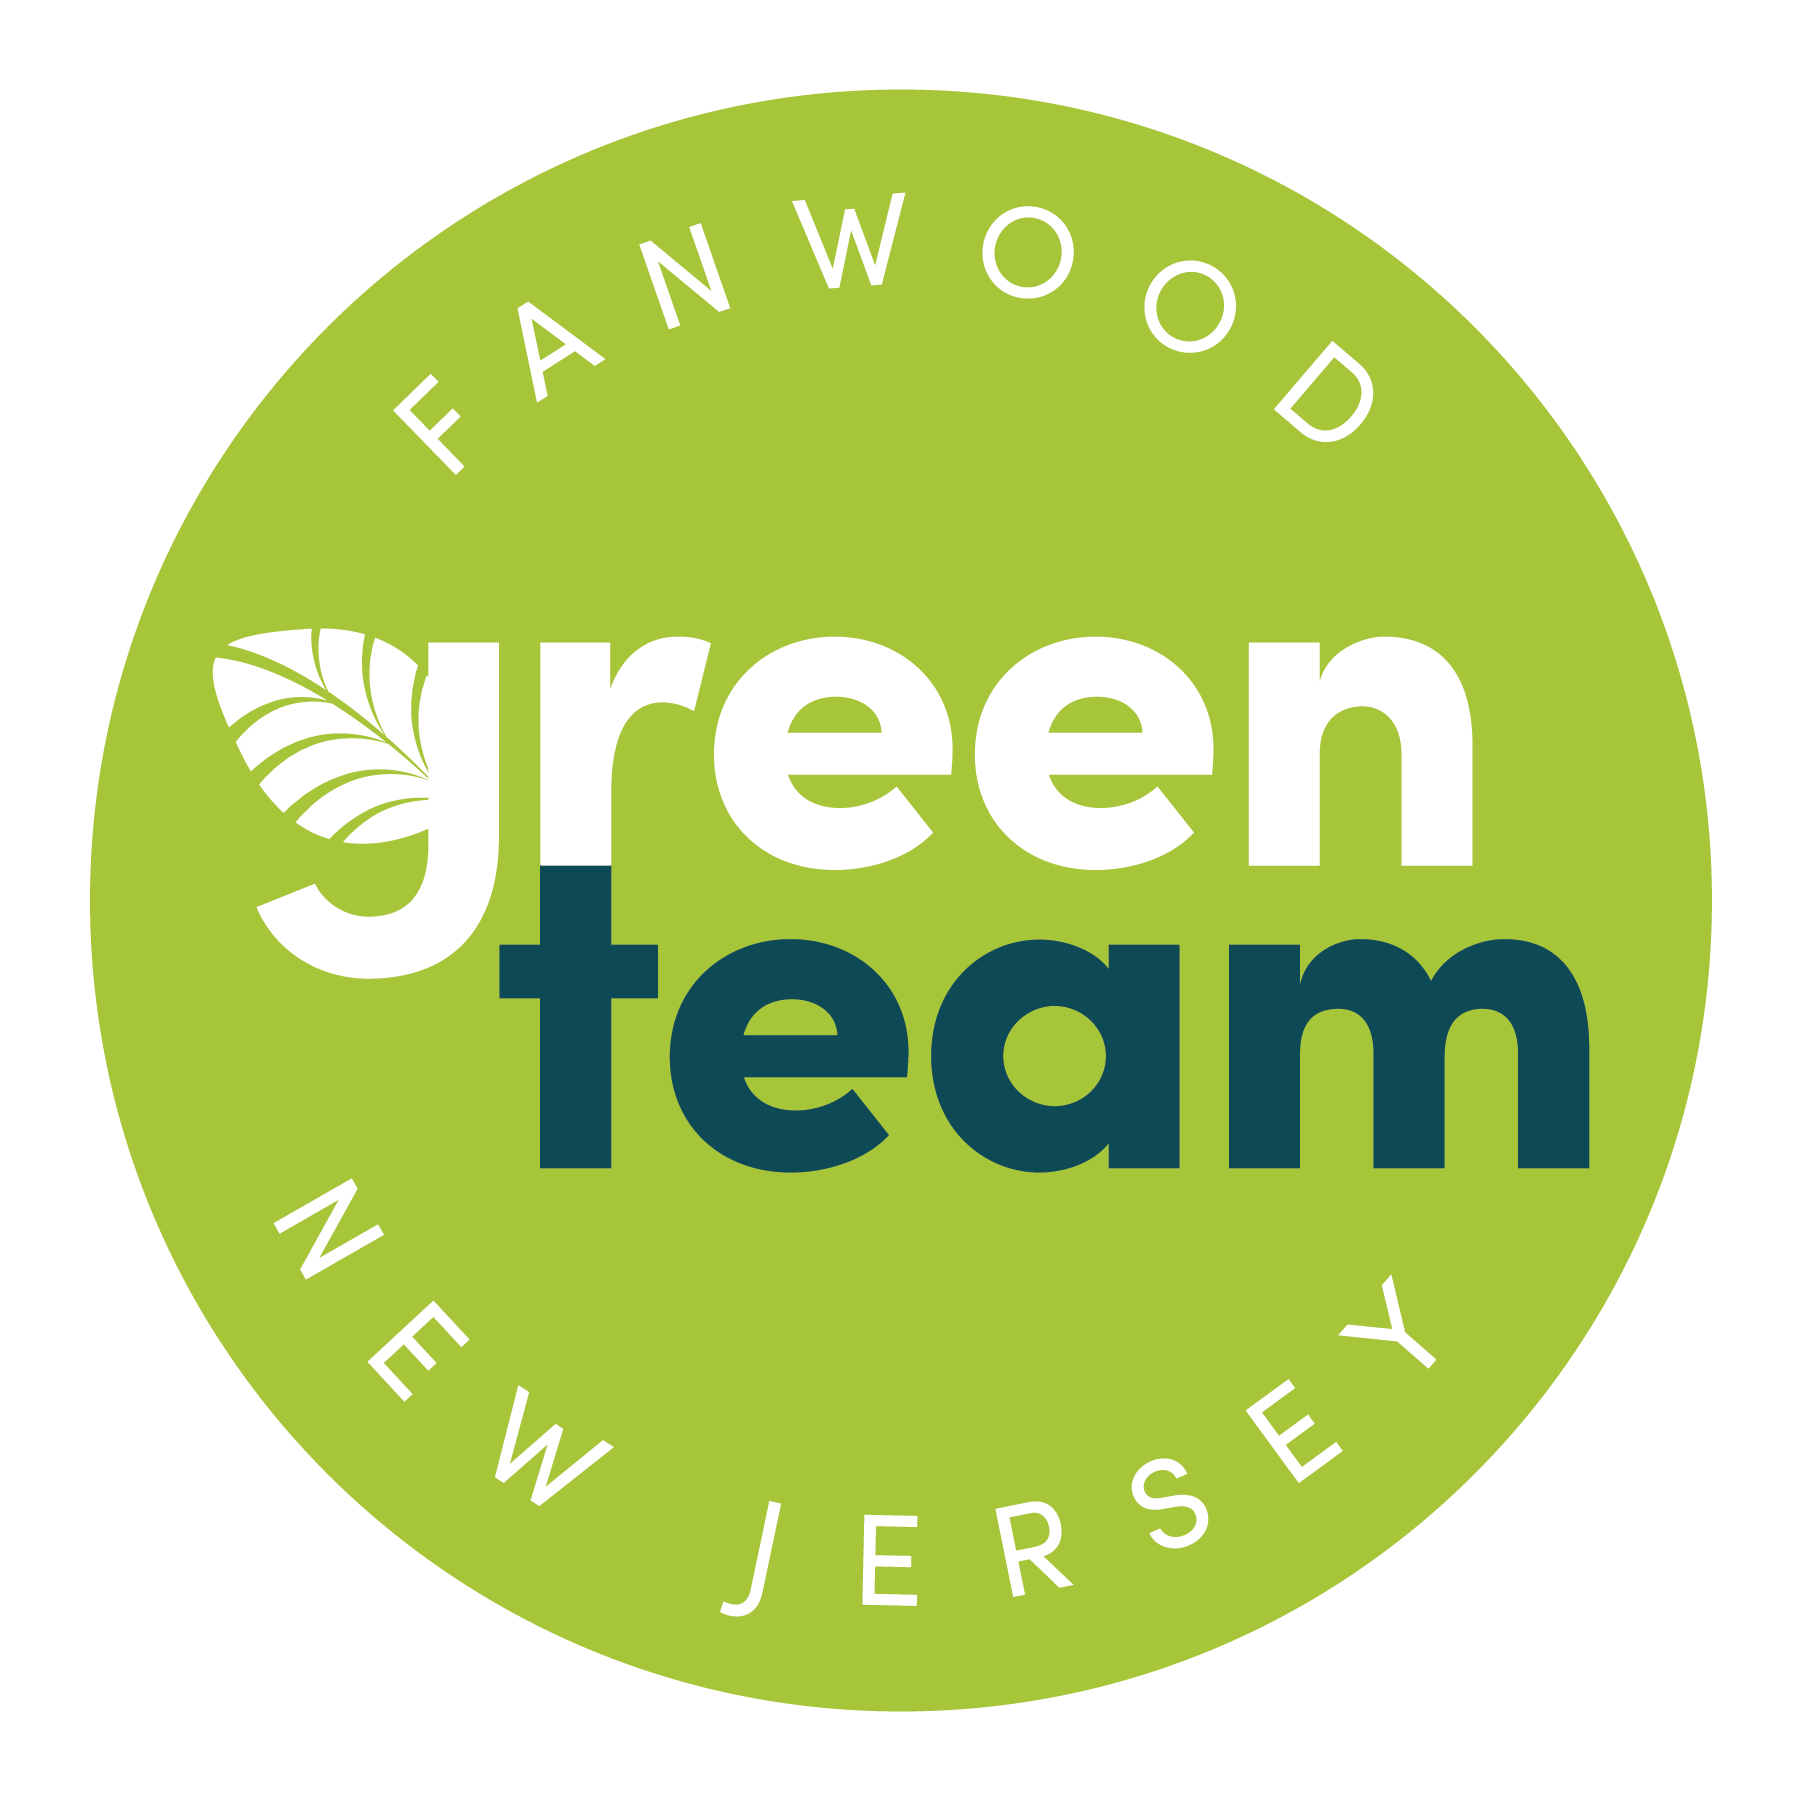 Fanwood Green Team logo